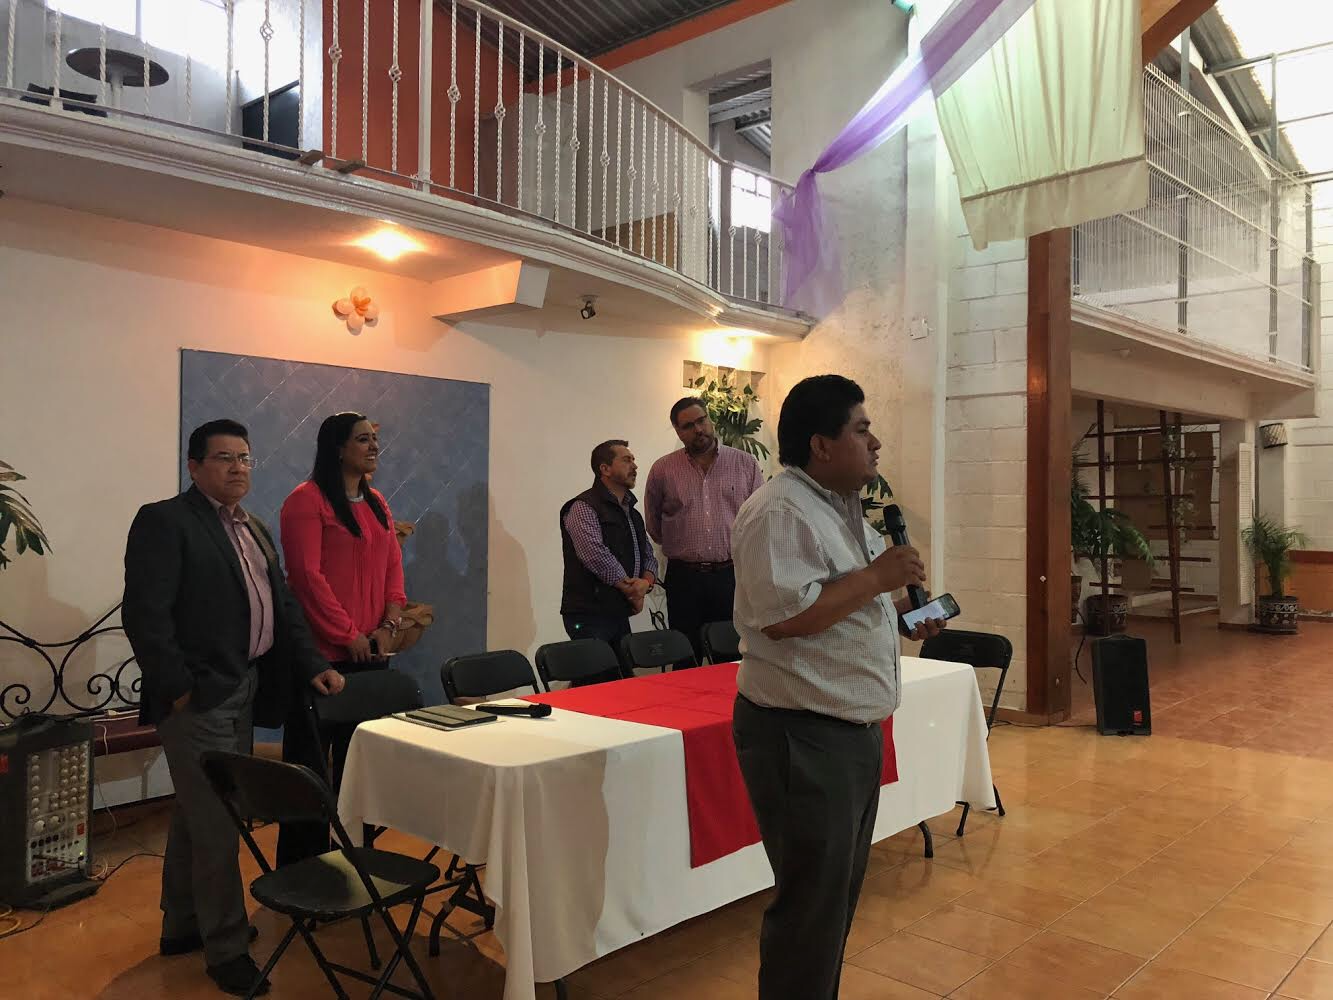  Iglesias cristianas de Querétaro se adhieren al proyecto presidencial de Meade